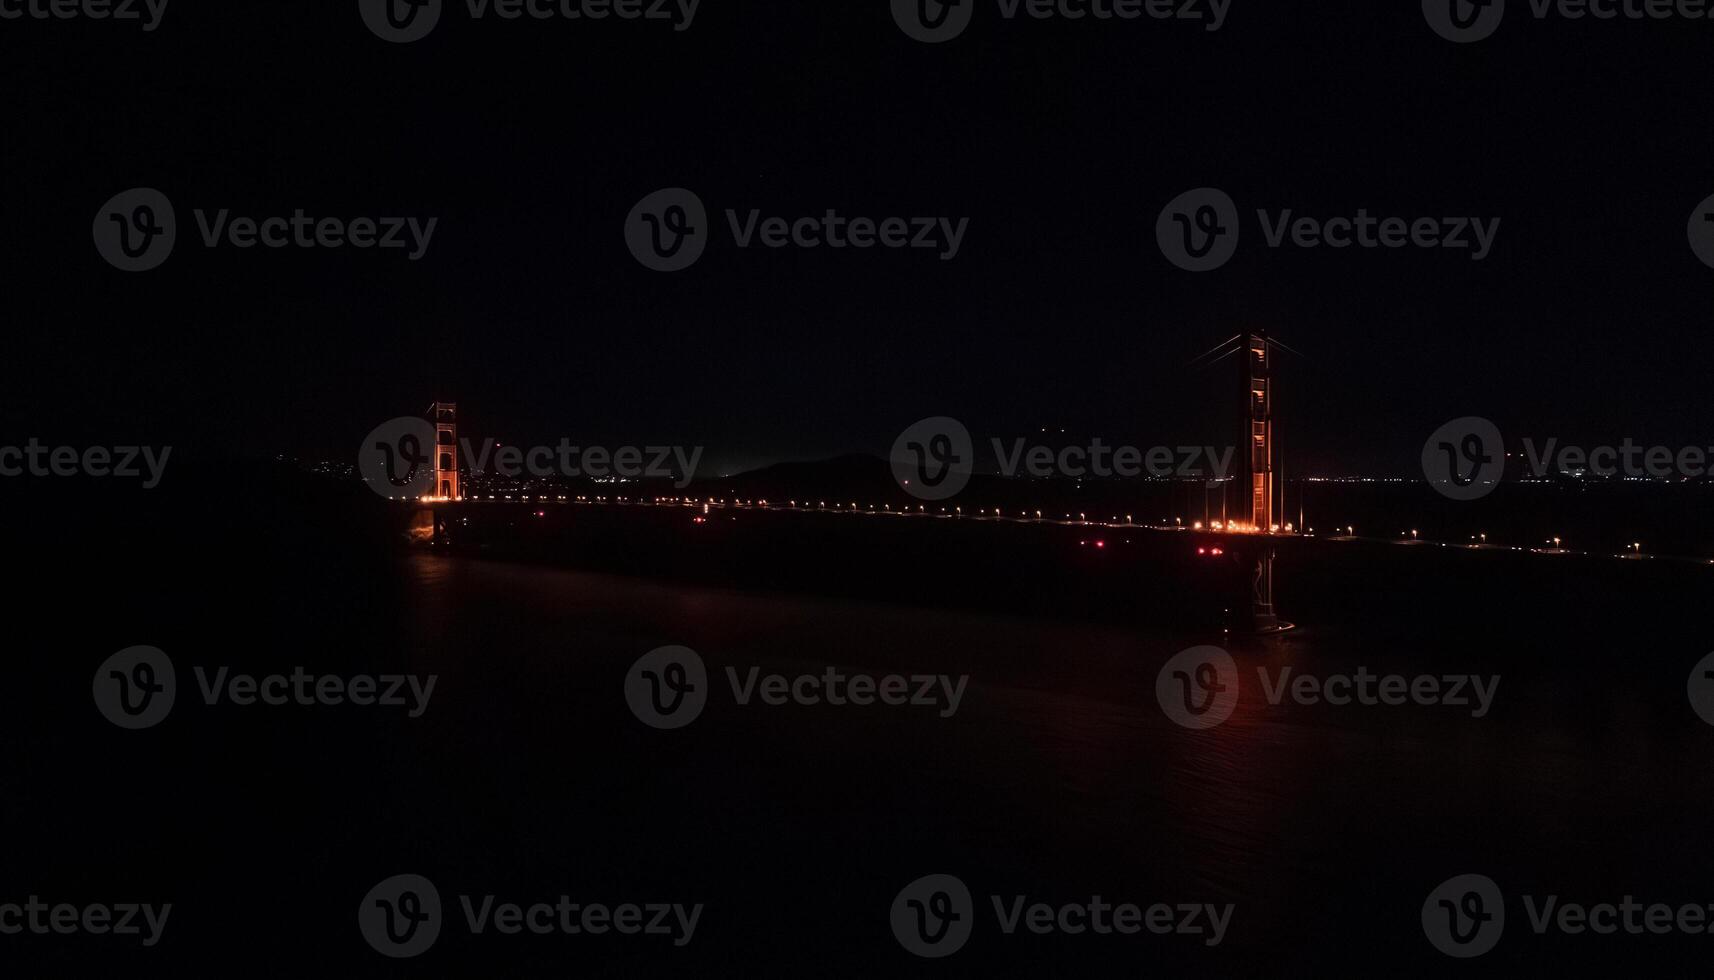 Famous Golden Gate Bridge, San Francisco at night, USA photo